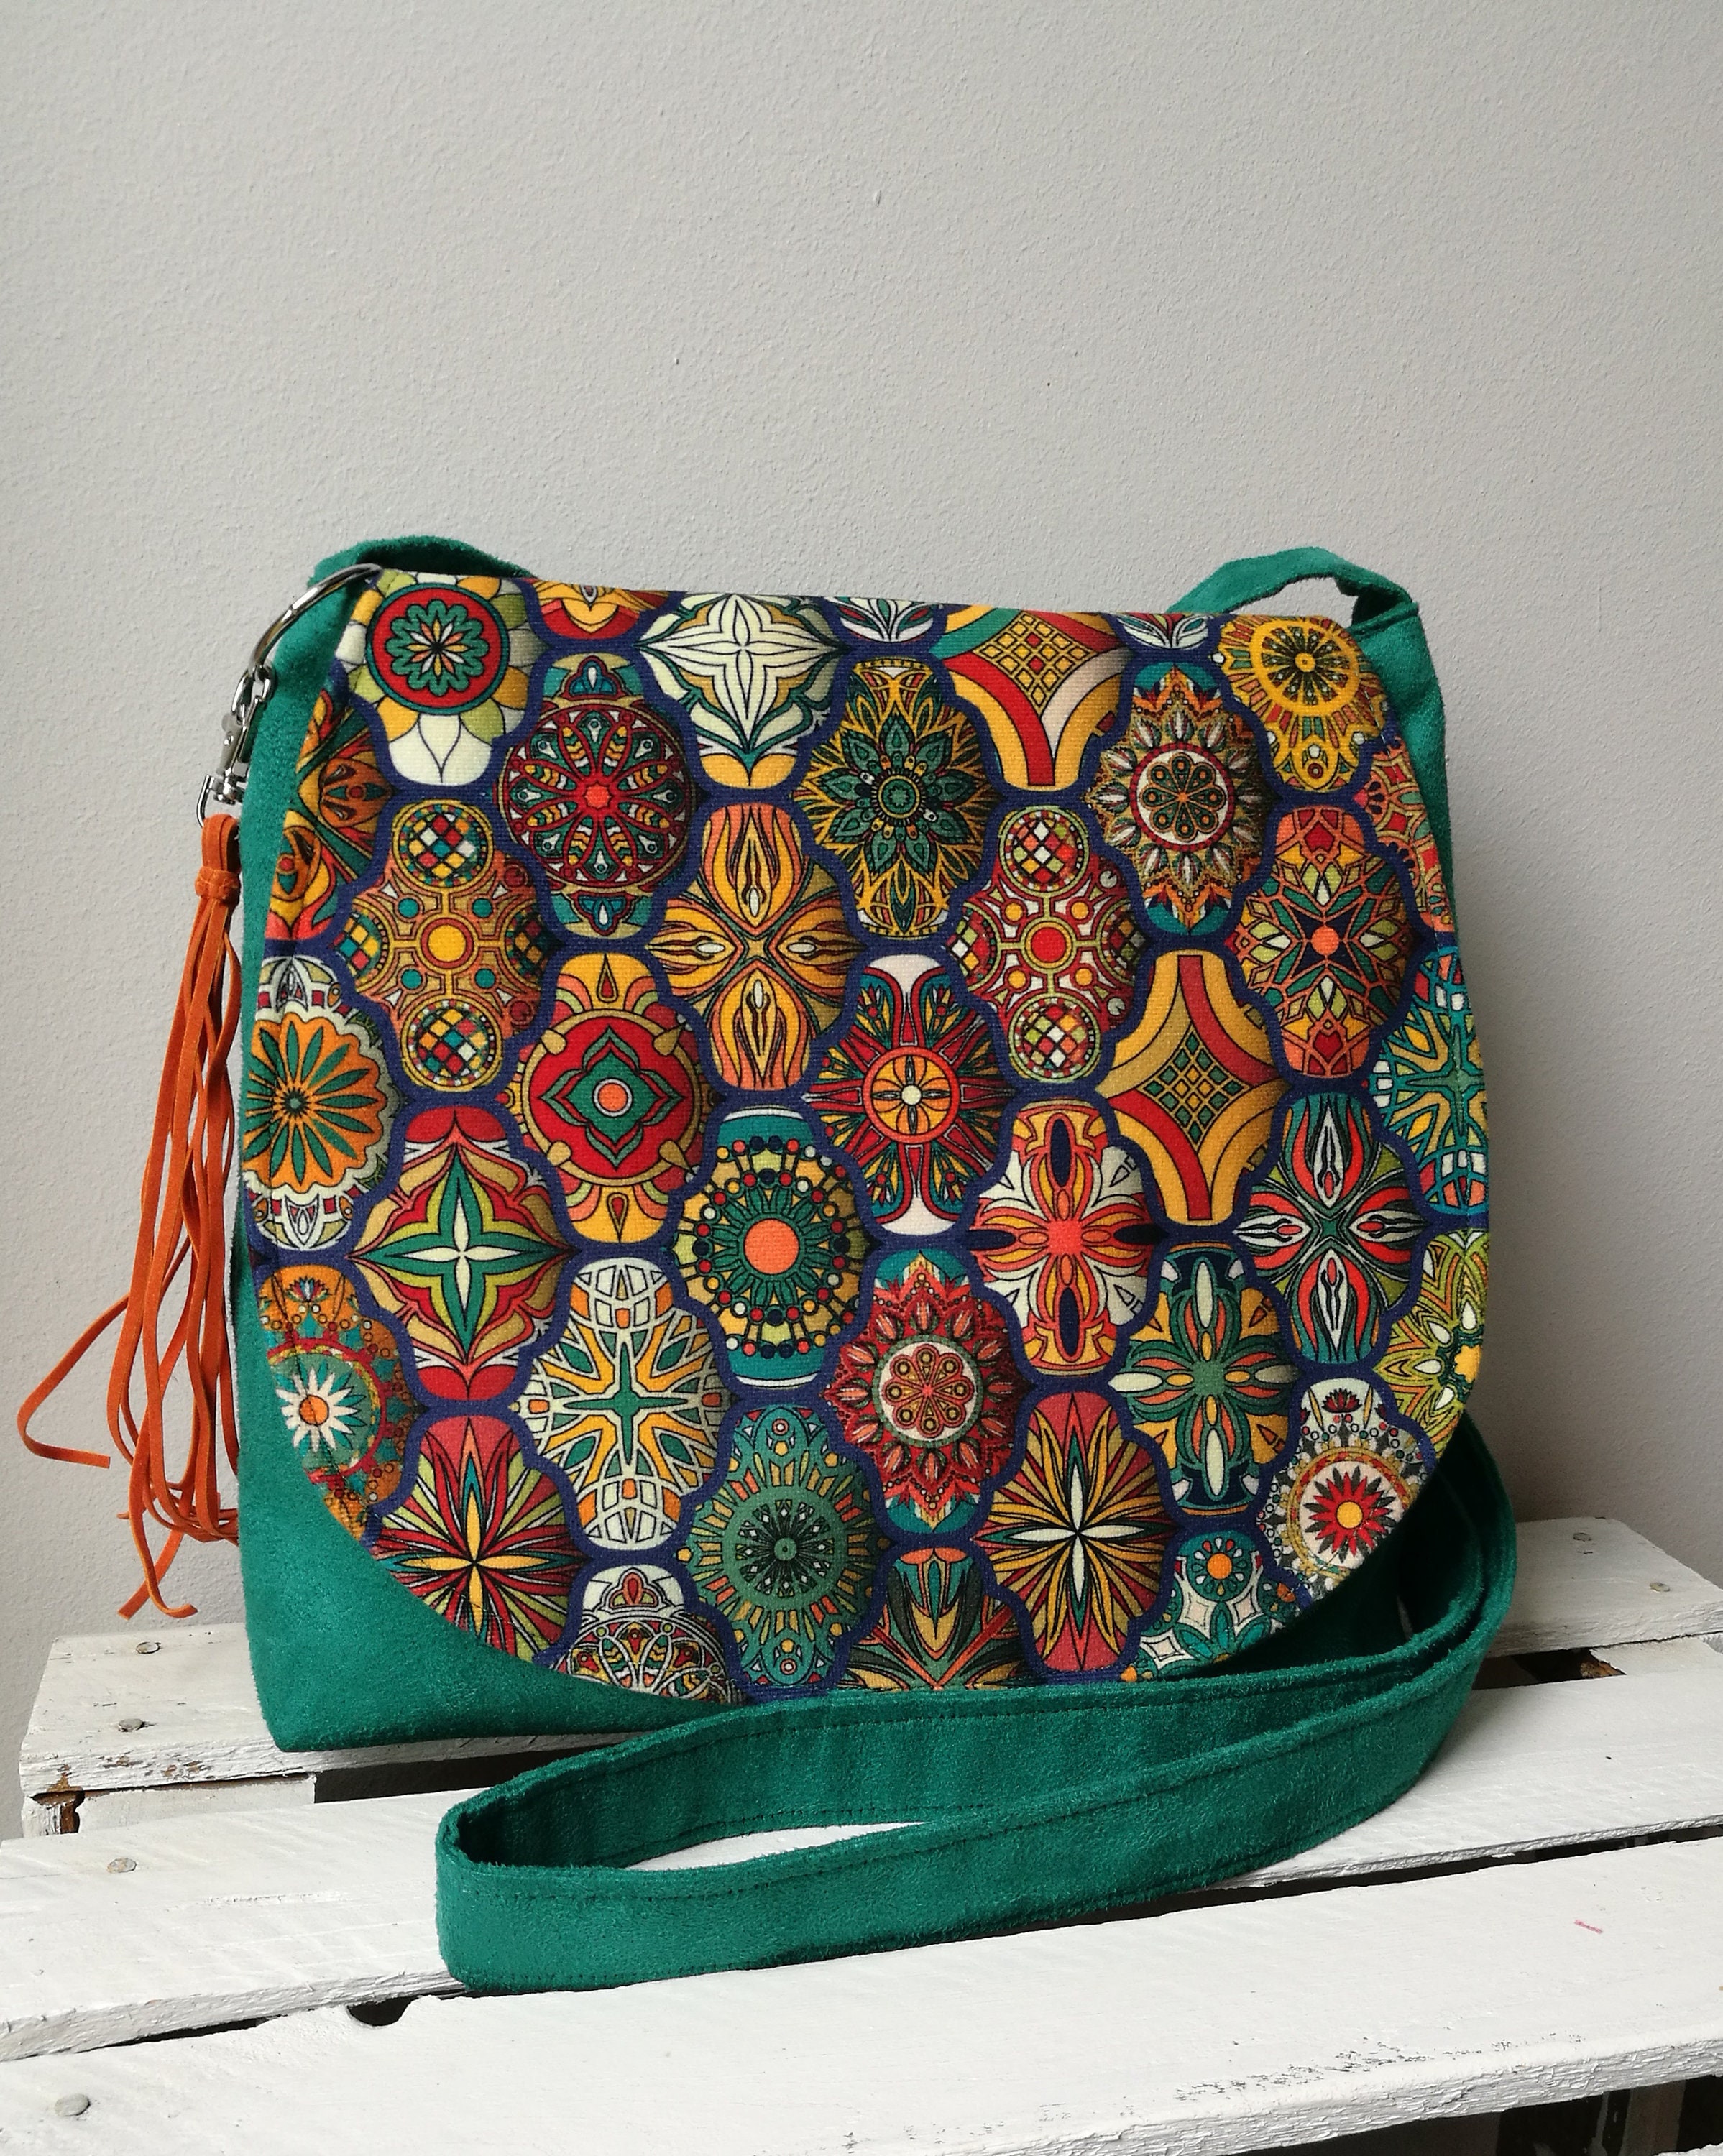 Cunno 3 Pieces Boho Bags for Women Crossbody Hippie Handbags Bohemian Hippie Bags Ethnic Style Bag Lady's Hippie Crossbody Shoulder Bag Women